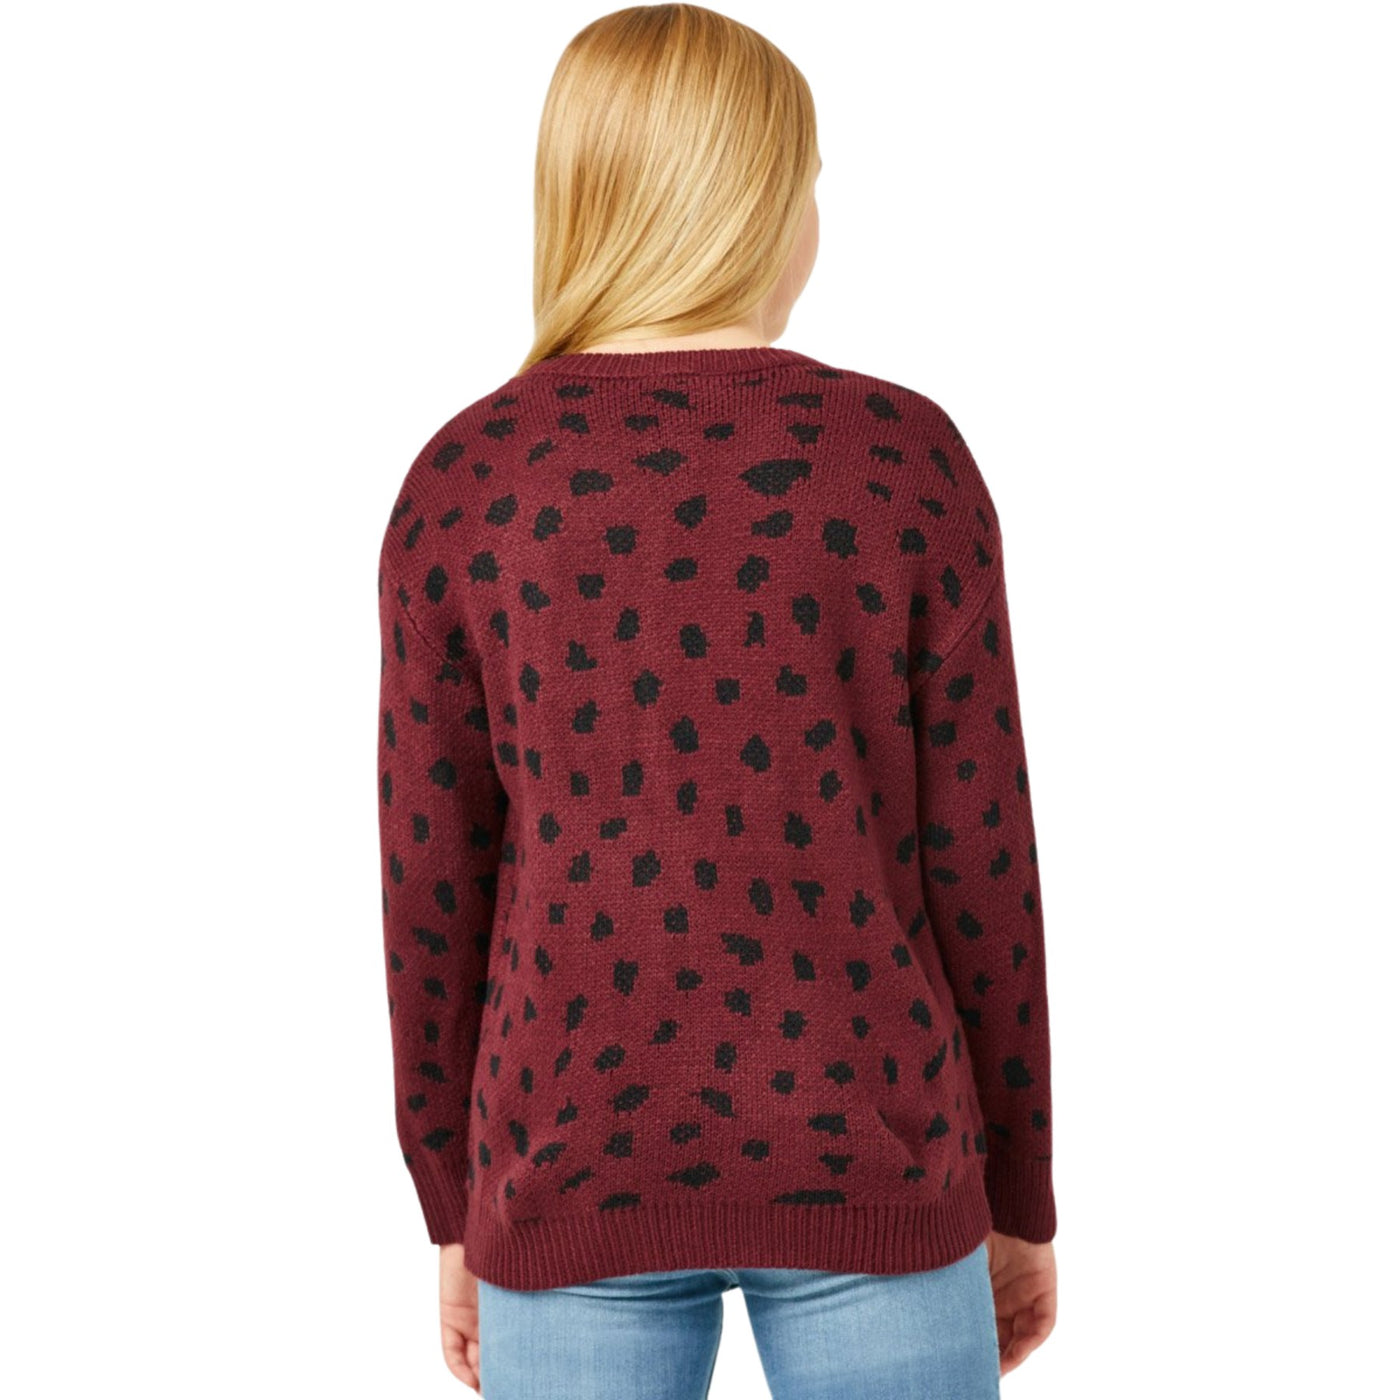 Leopard Print Pullover Sweater Knit Top Hayden Girls